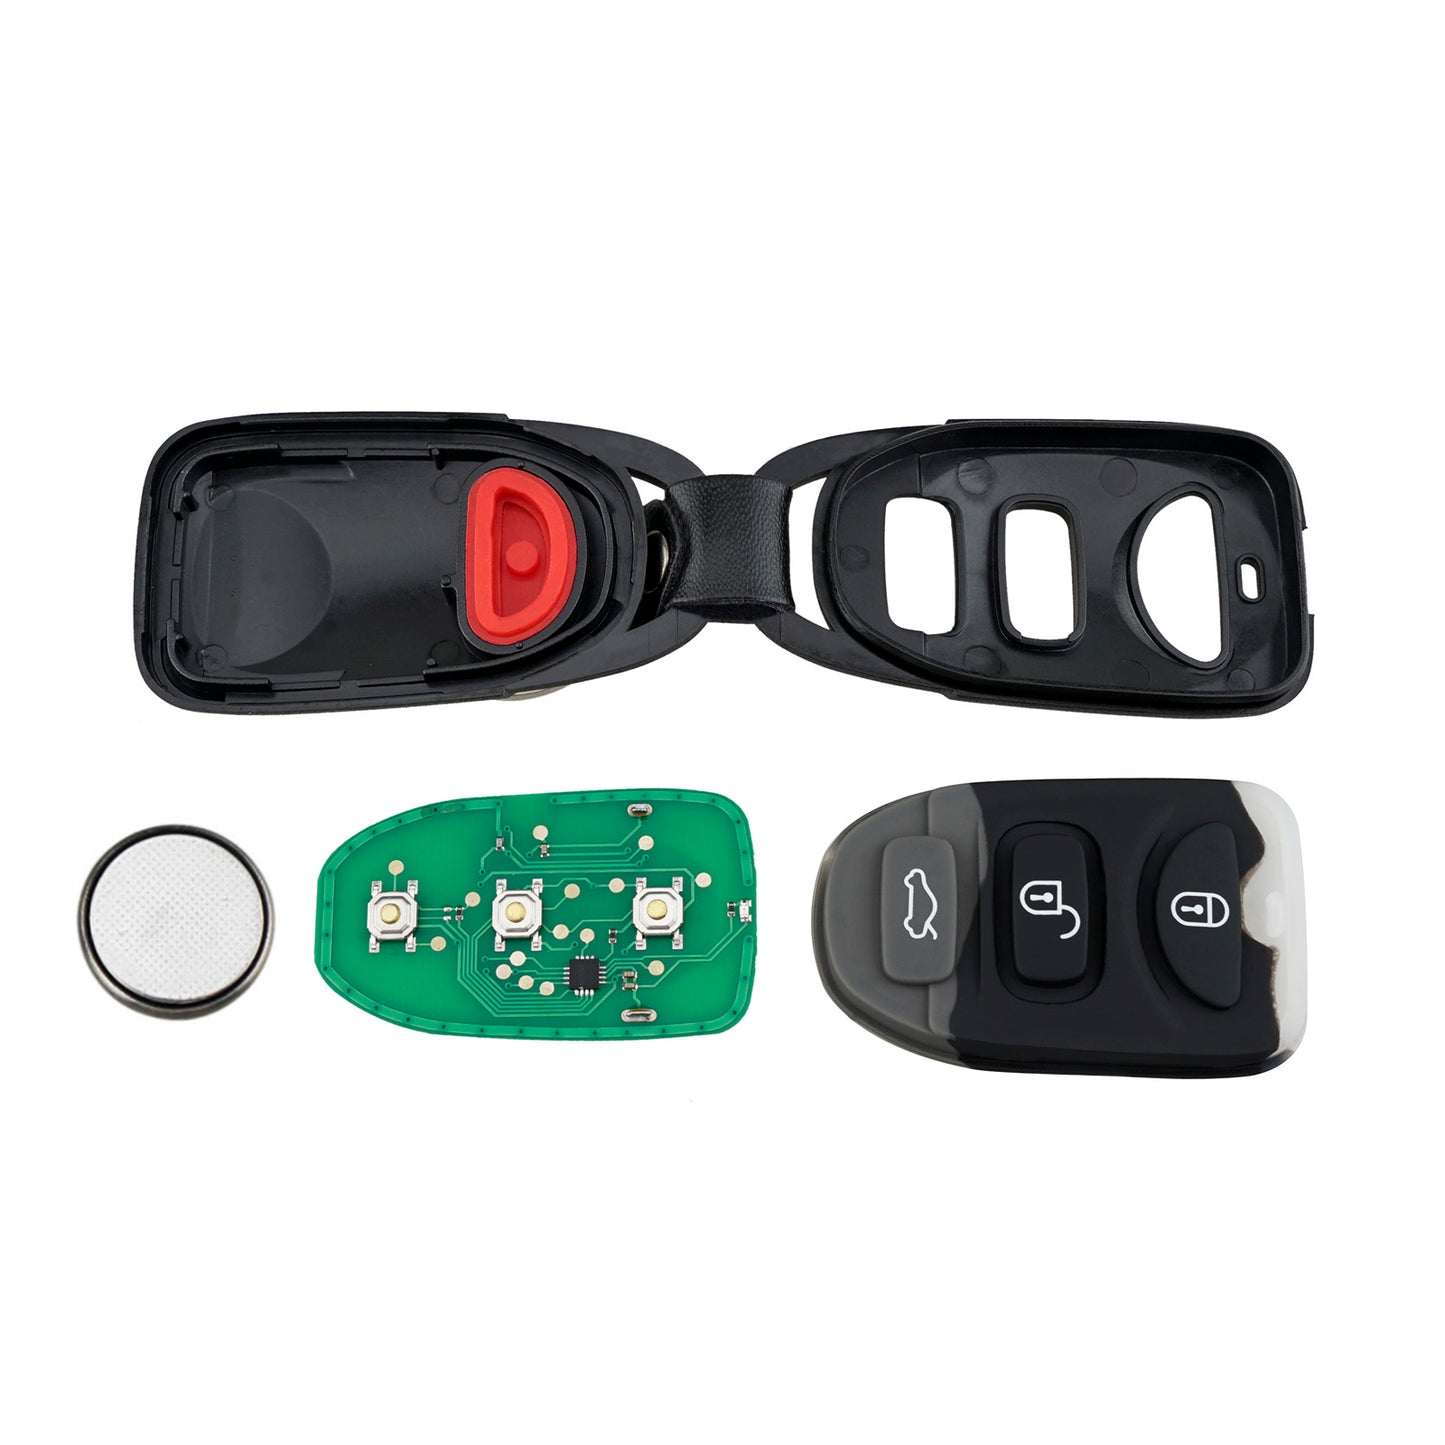 3+1 Buttons 315MHz Keyless Entry Fob Remote Car Key For 2007-2010 Kia Sorento Rondo FCC ID: PLNHM-T011 PLNHMT011 : J924